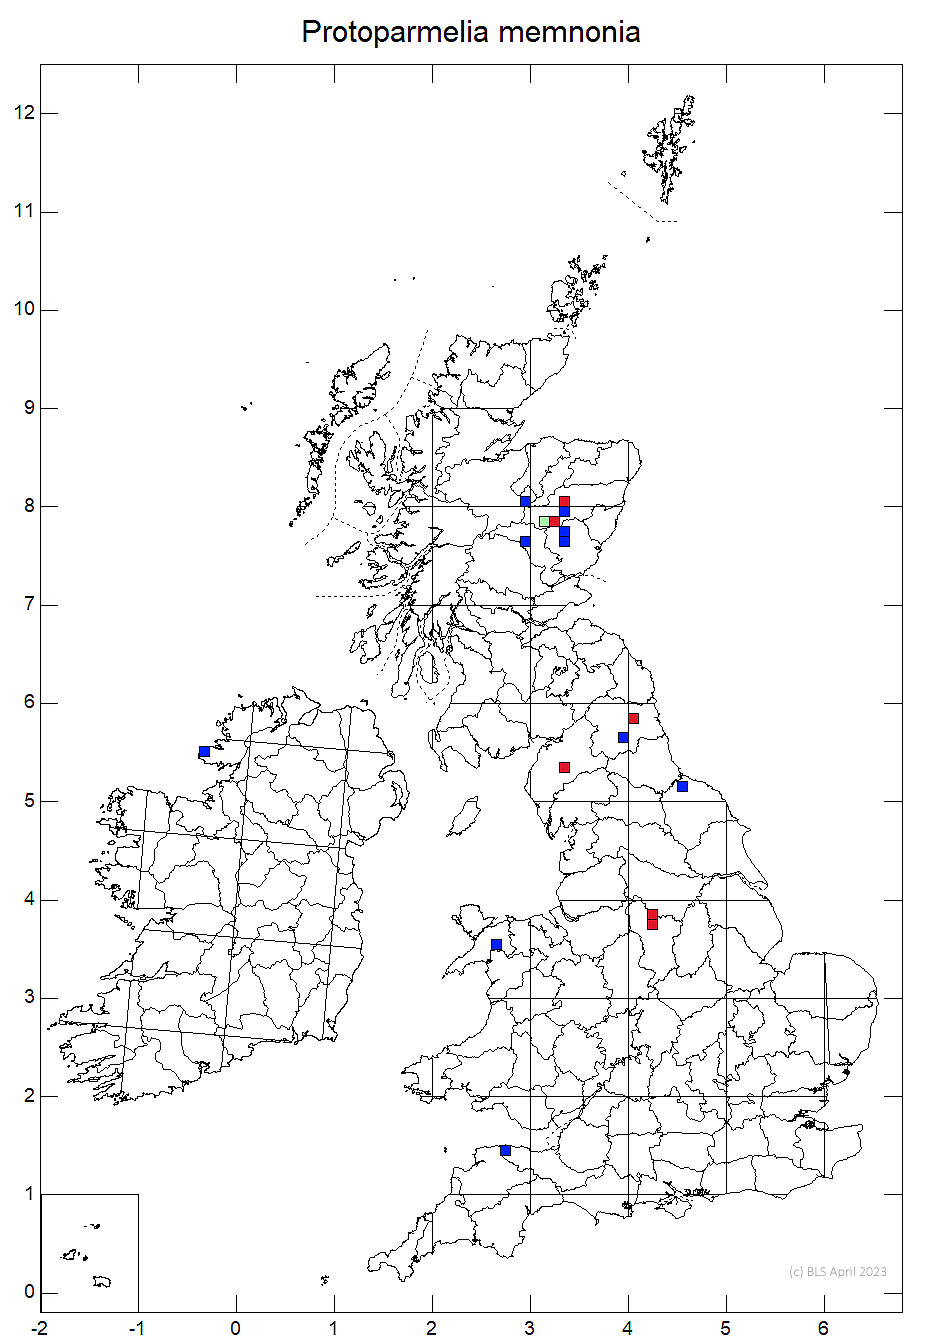 Protoparmelia memnonia 10km sq distribution map